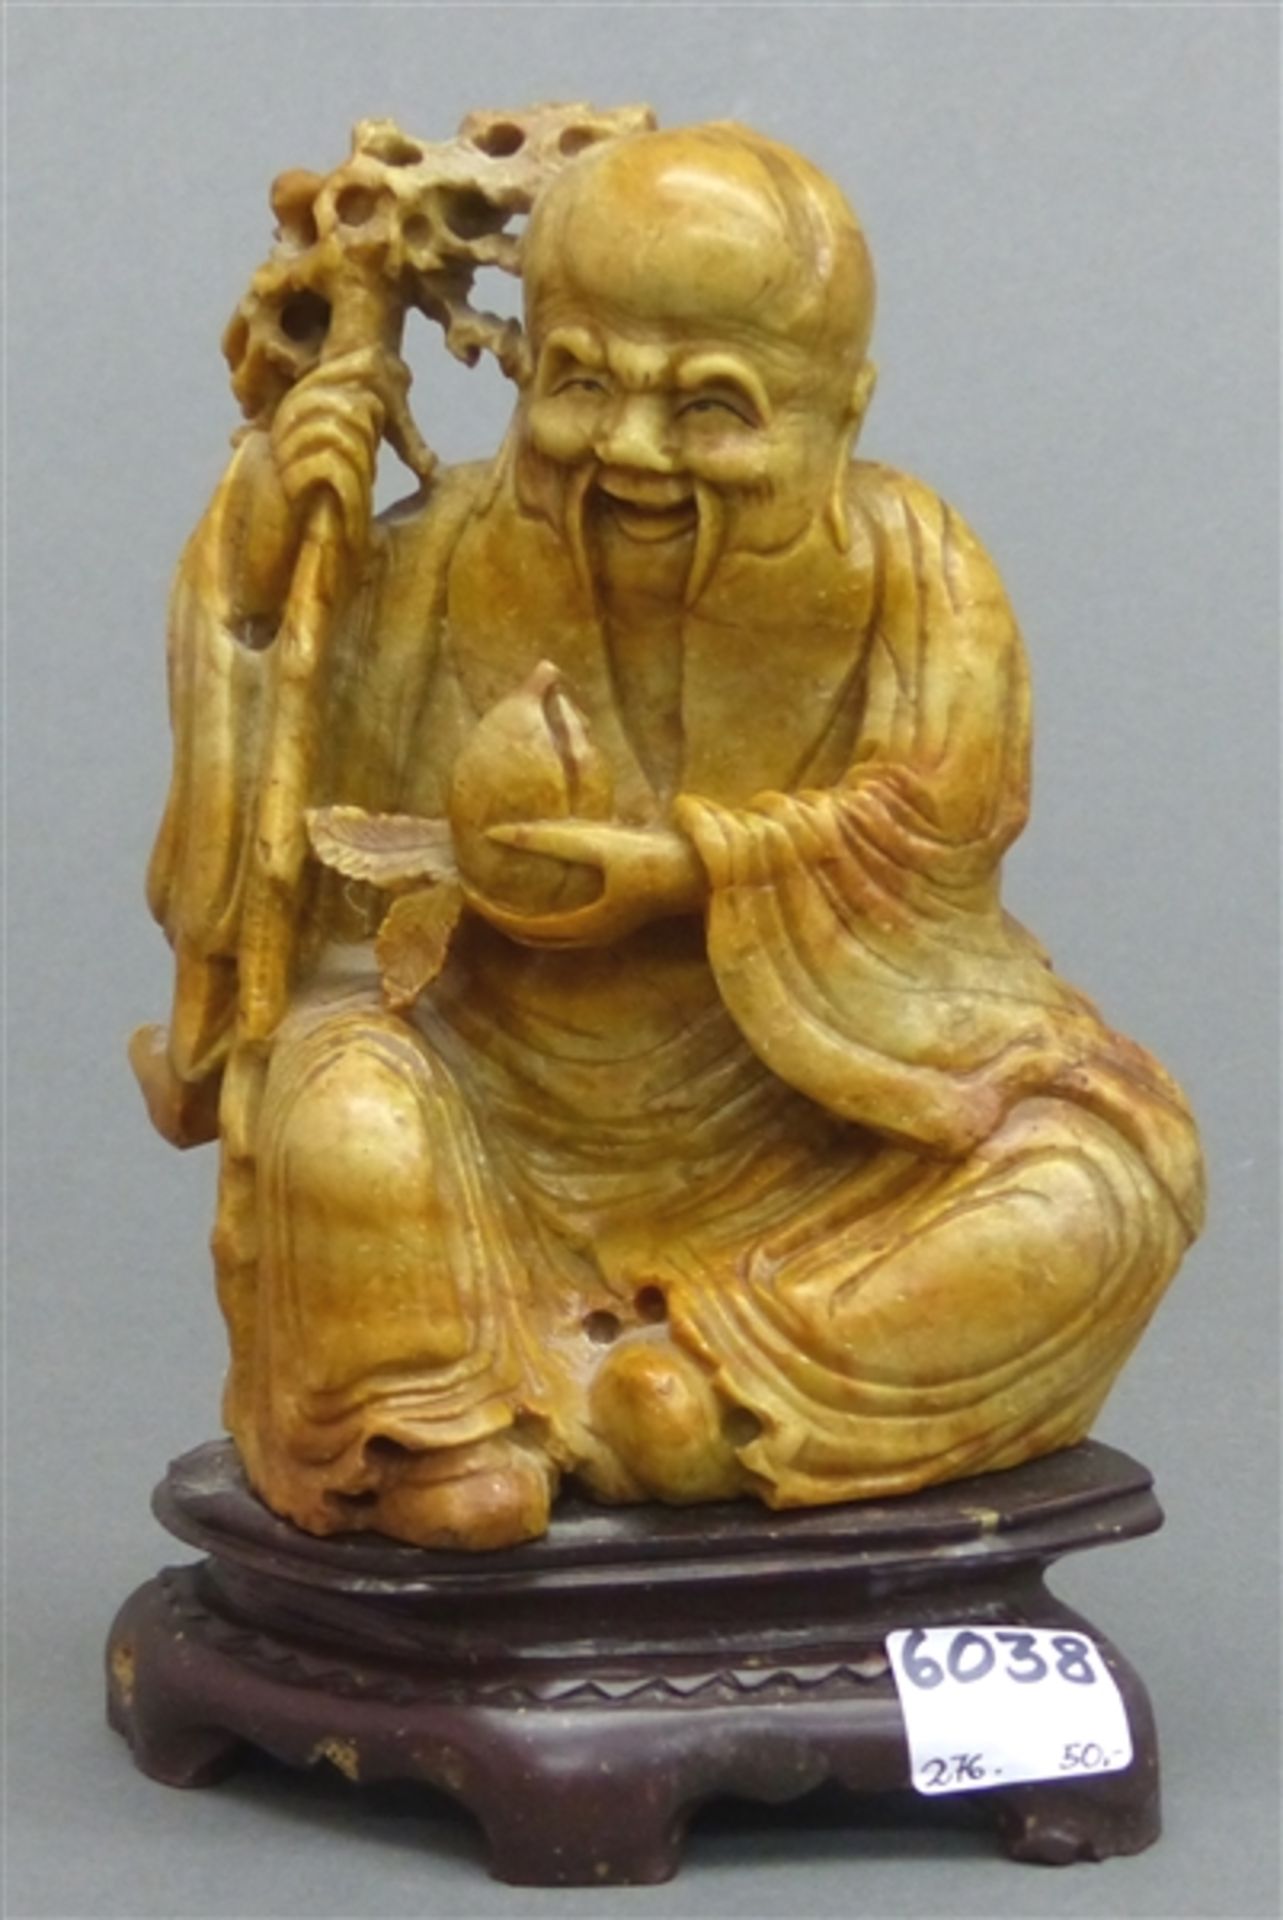 Specksteinfigur geschnitzt, China, sitzender Buddha, 20. Jh., h 17 cm,